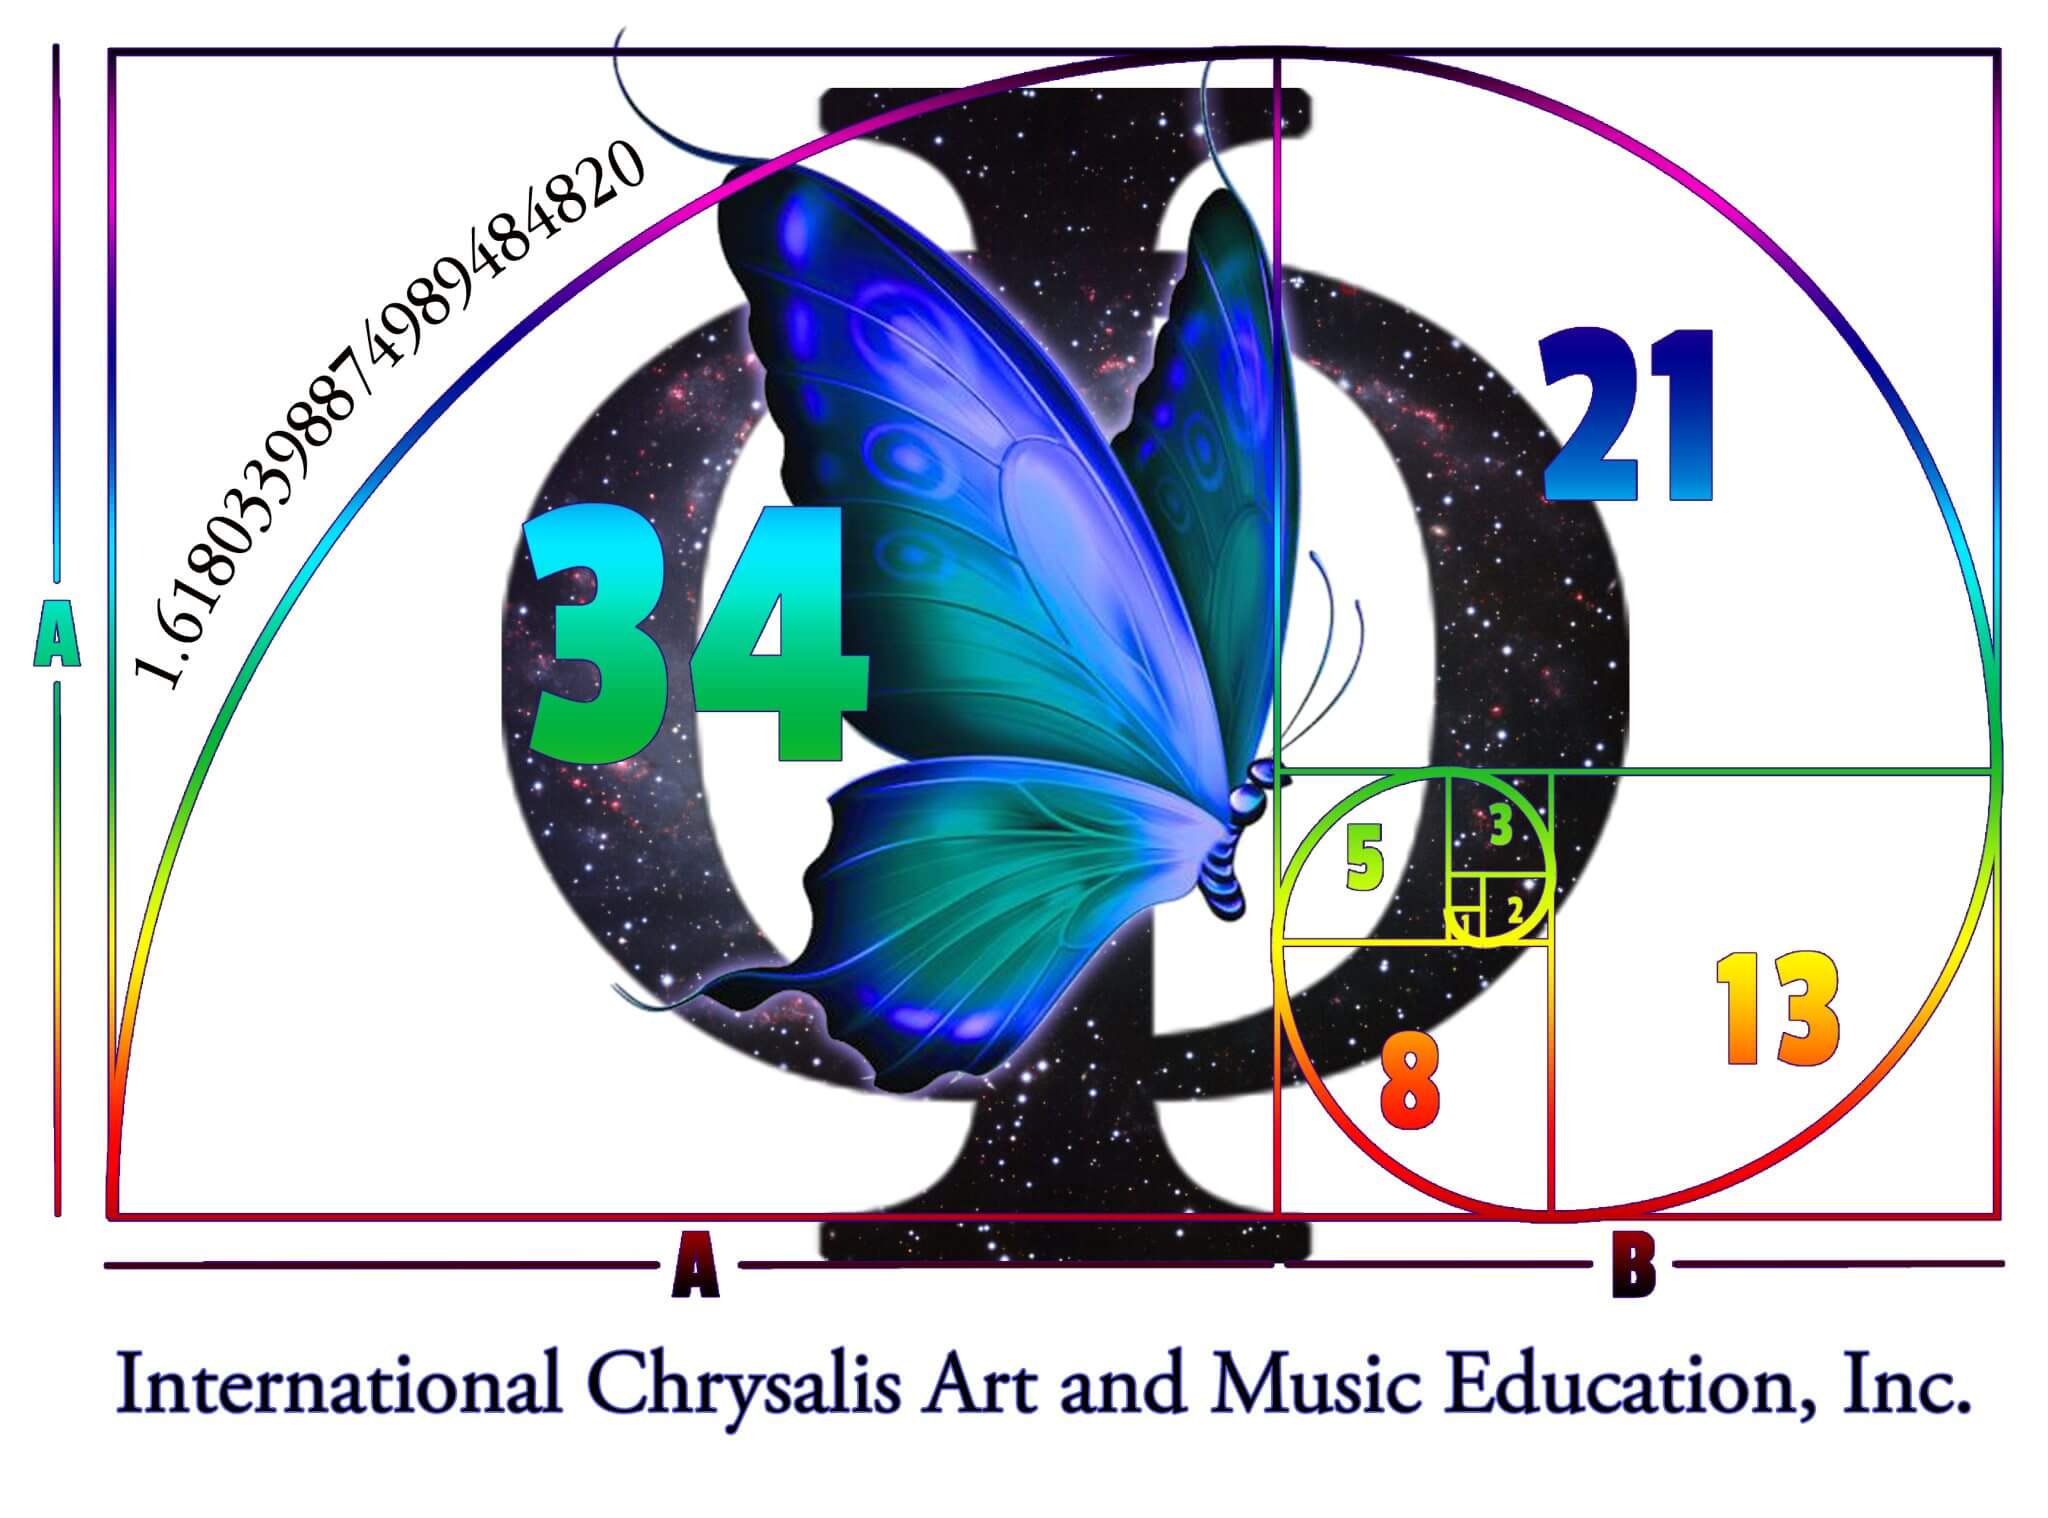 International Chrysalis Art and Music Education, Inc